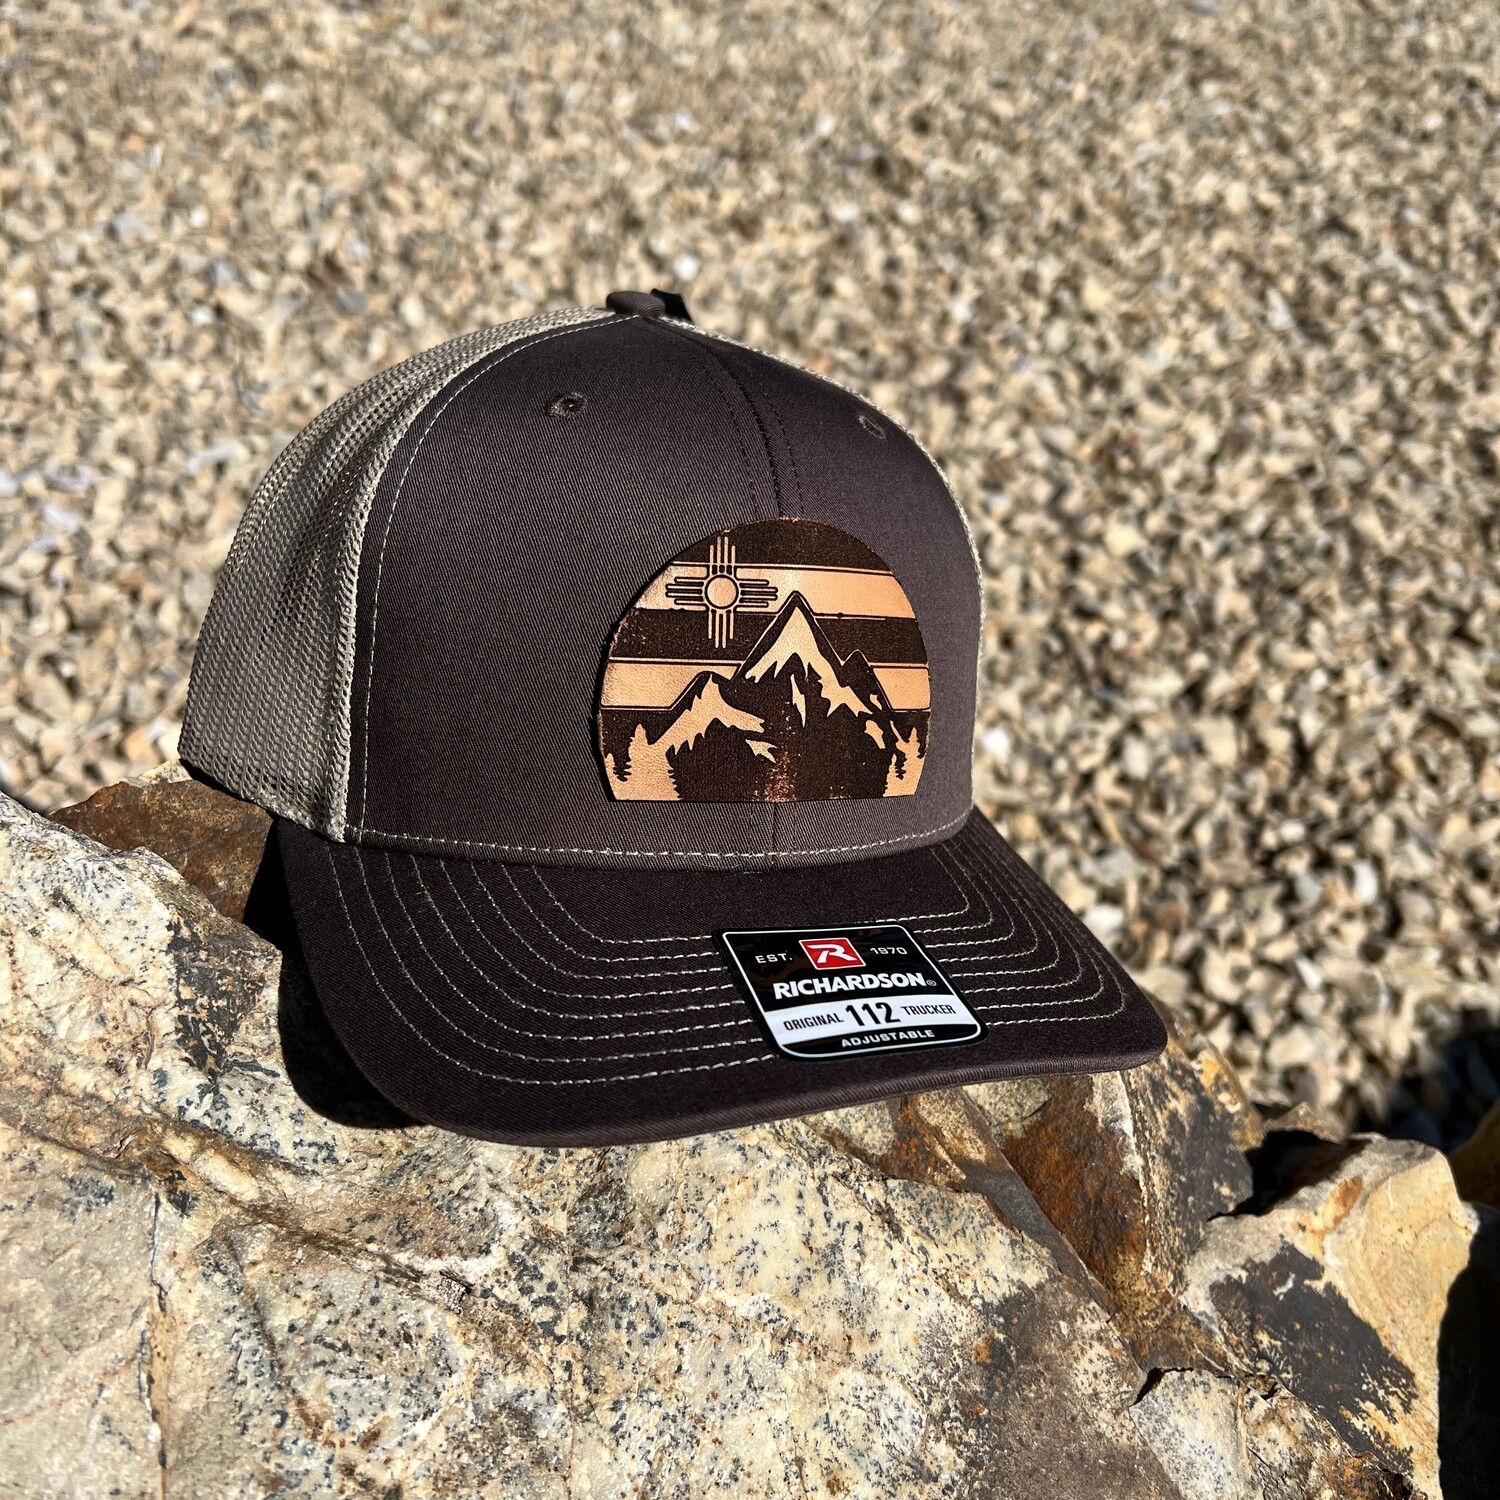 Richardson SnapBack 112 Navy Hat with Leather NM Shape Zia Flag Patch - Regular